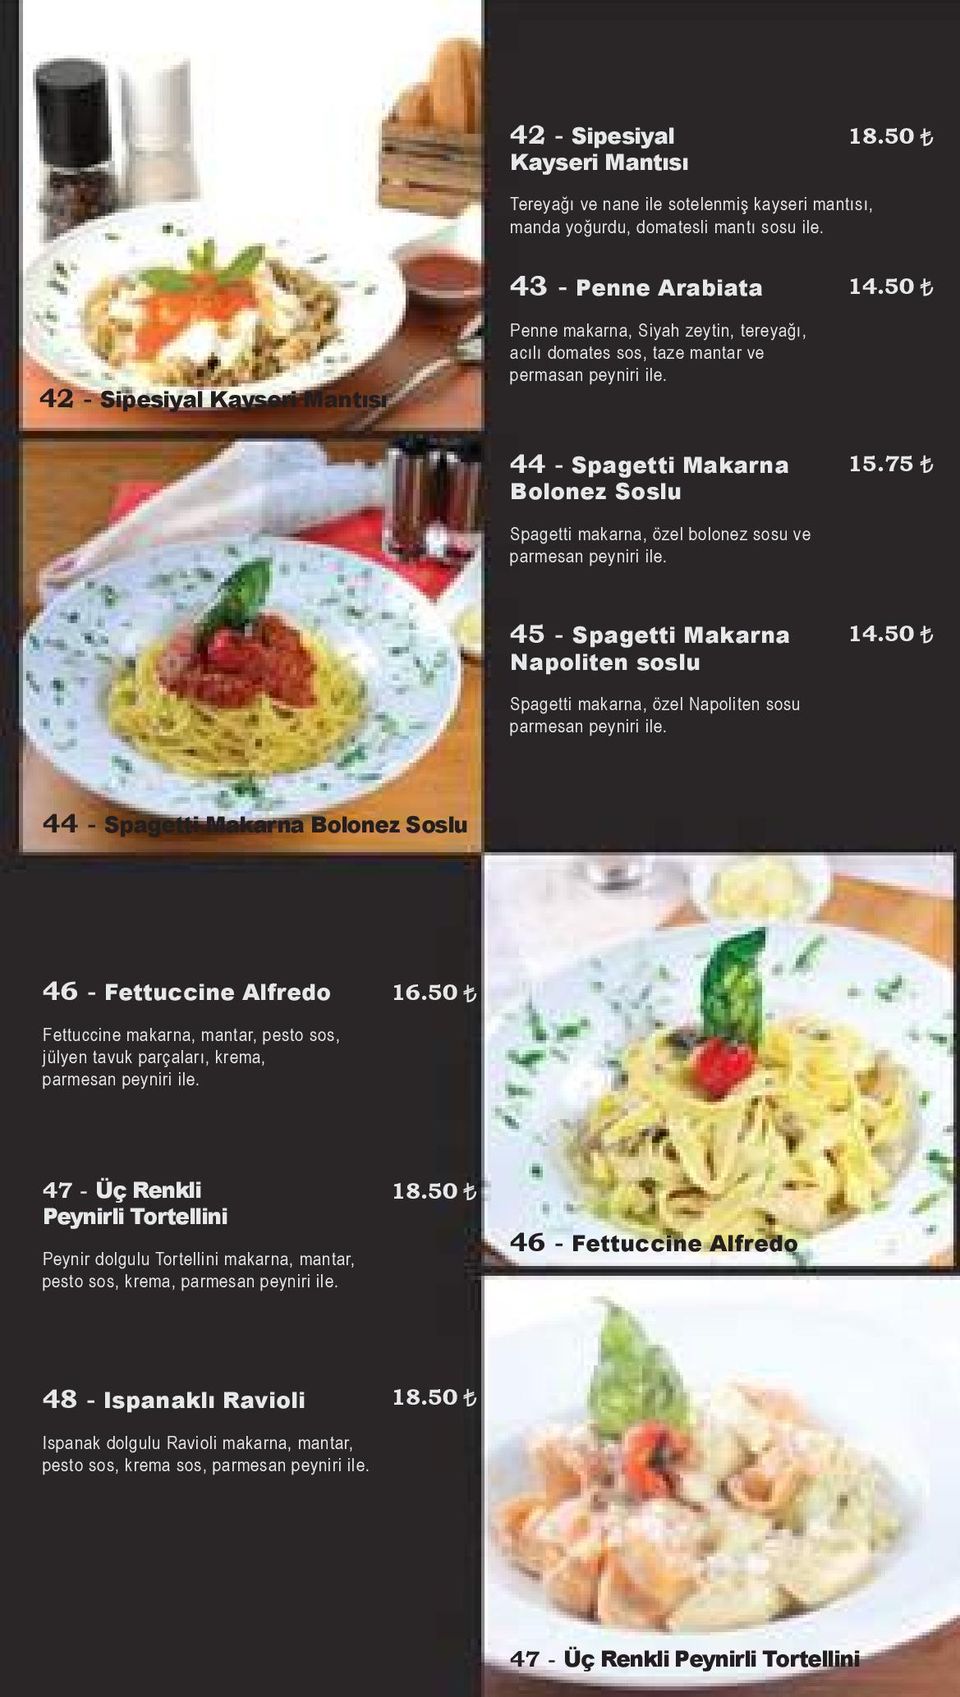 75 Spagetti makarna, özel bolonez sosu ve parmesan peyniri ile. 45 - Spagetti Makarna Napoliten soslu 14.50 Spagetti makarna, özel Napoliten sosu parmesan peyniri ile.